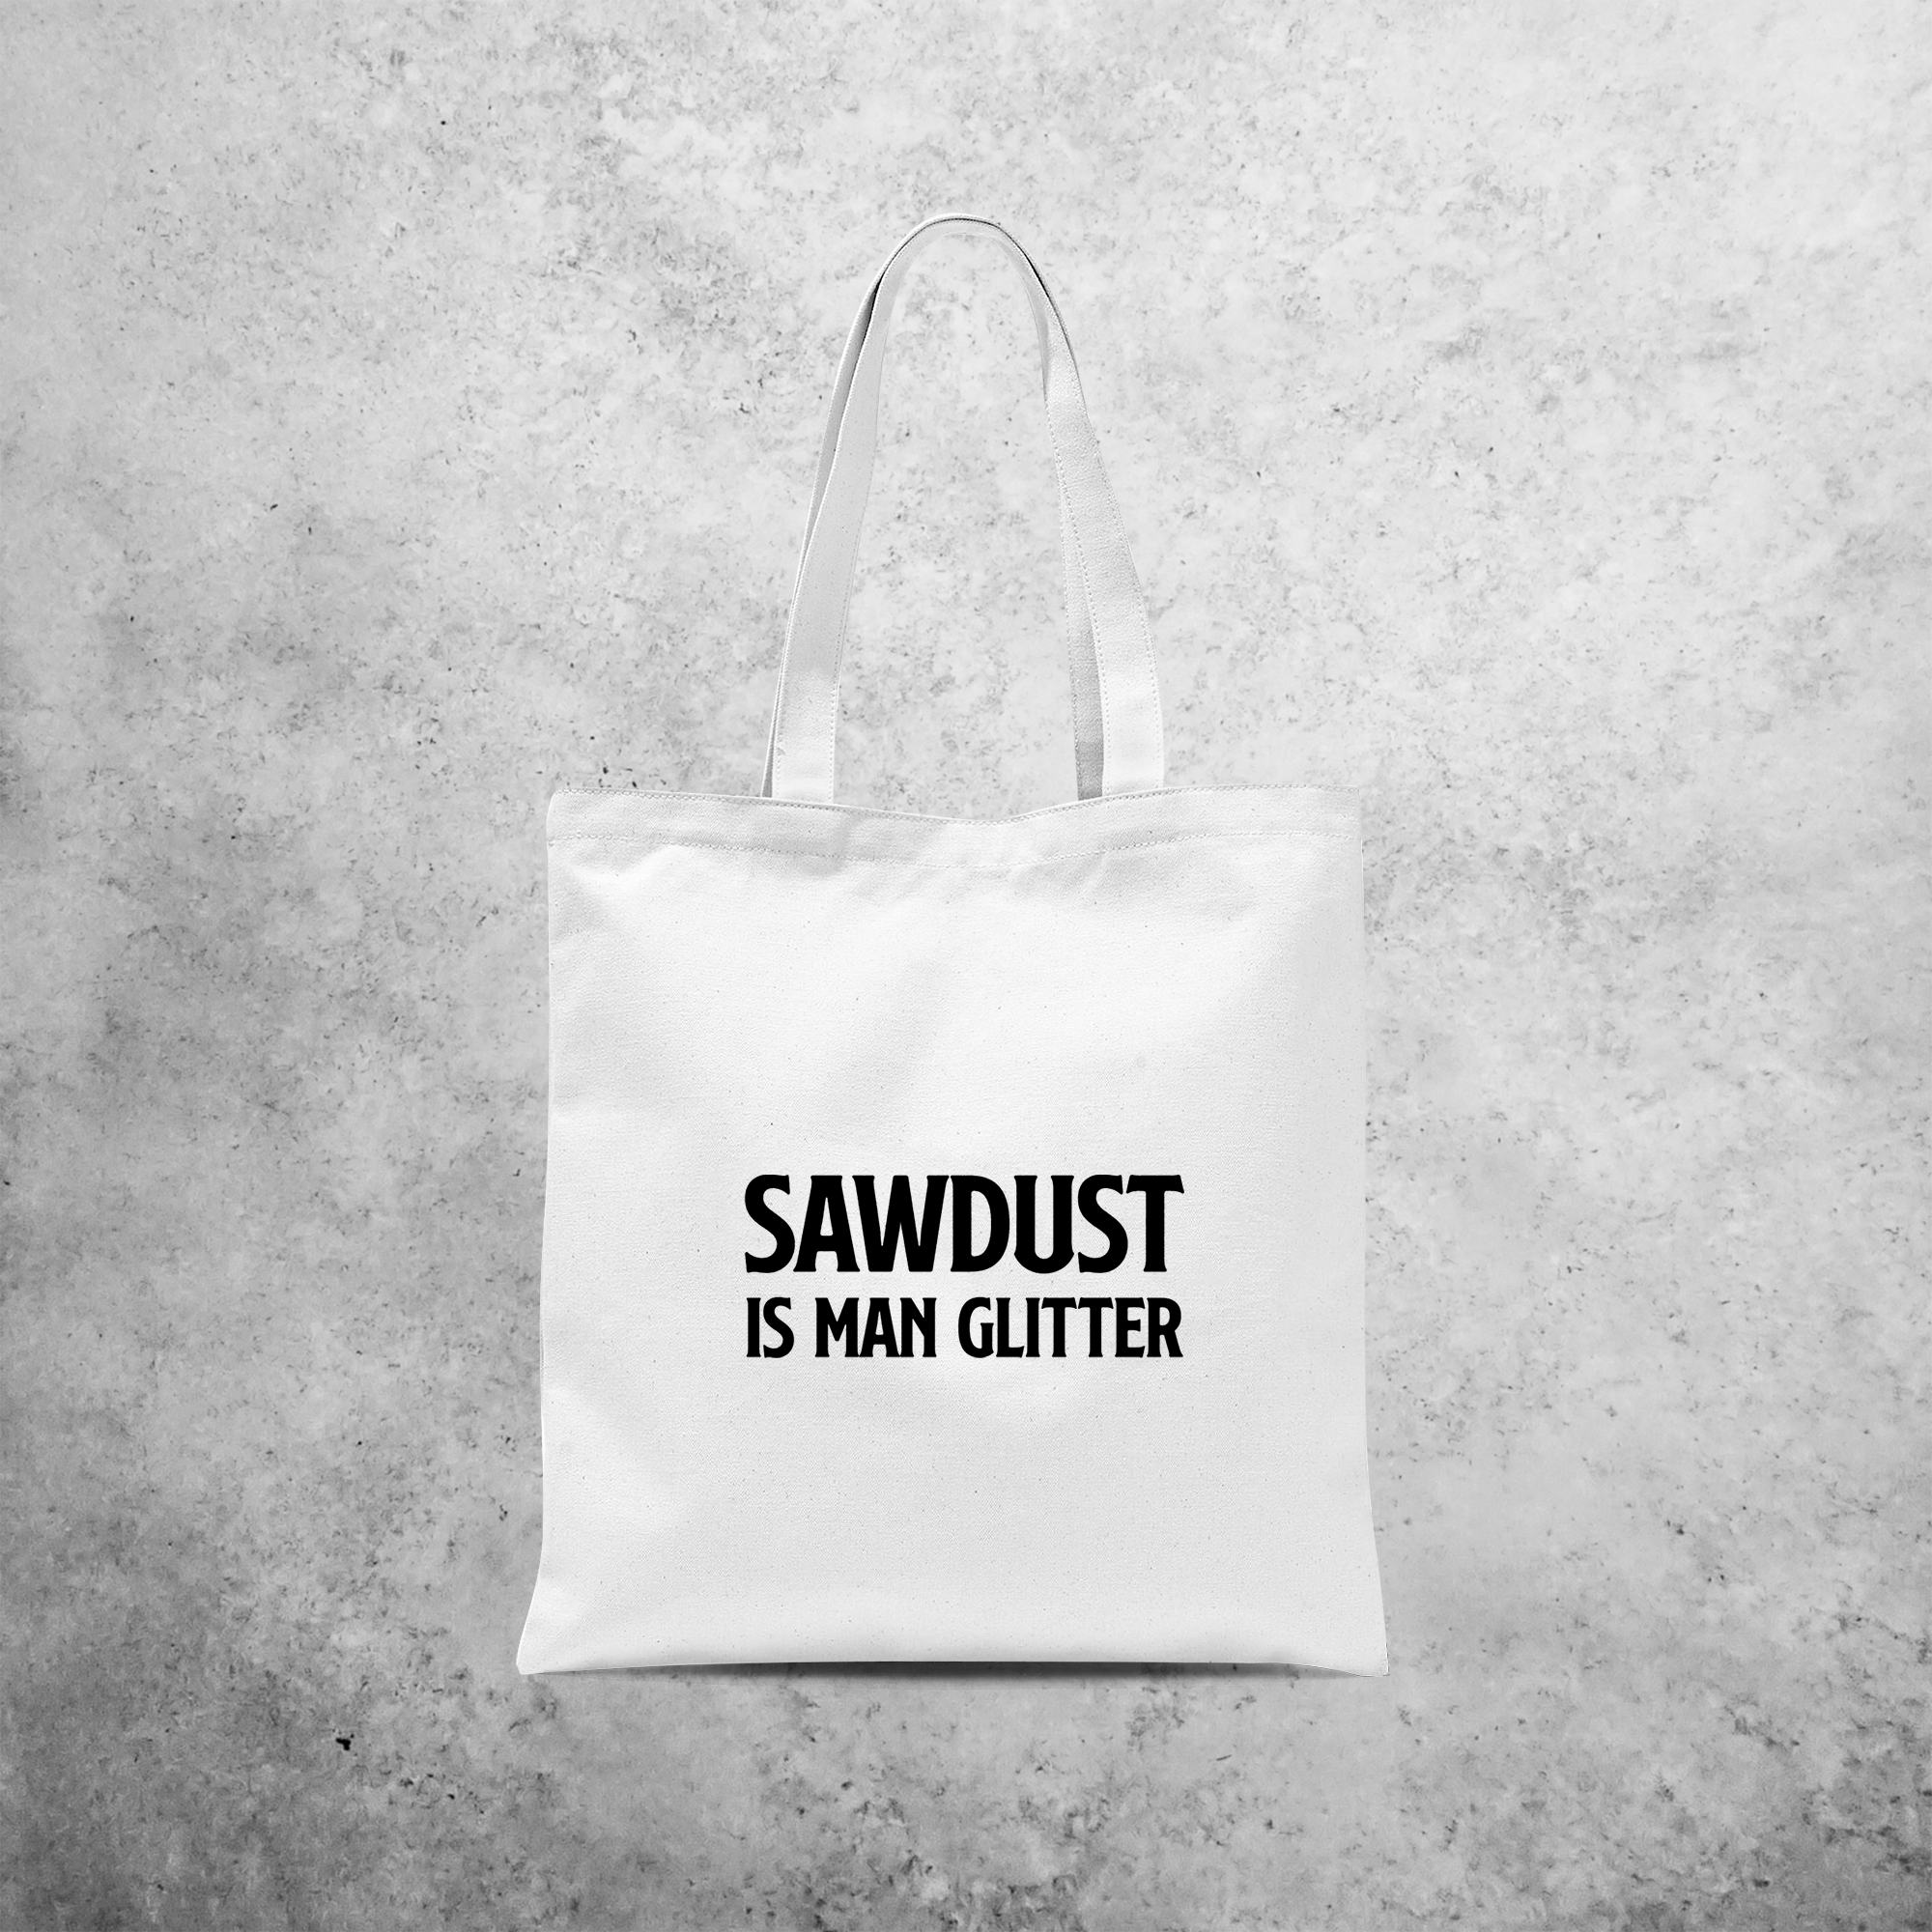 'Sawdust is man glitter' tote bag